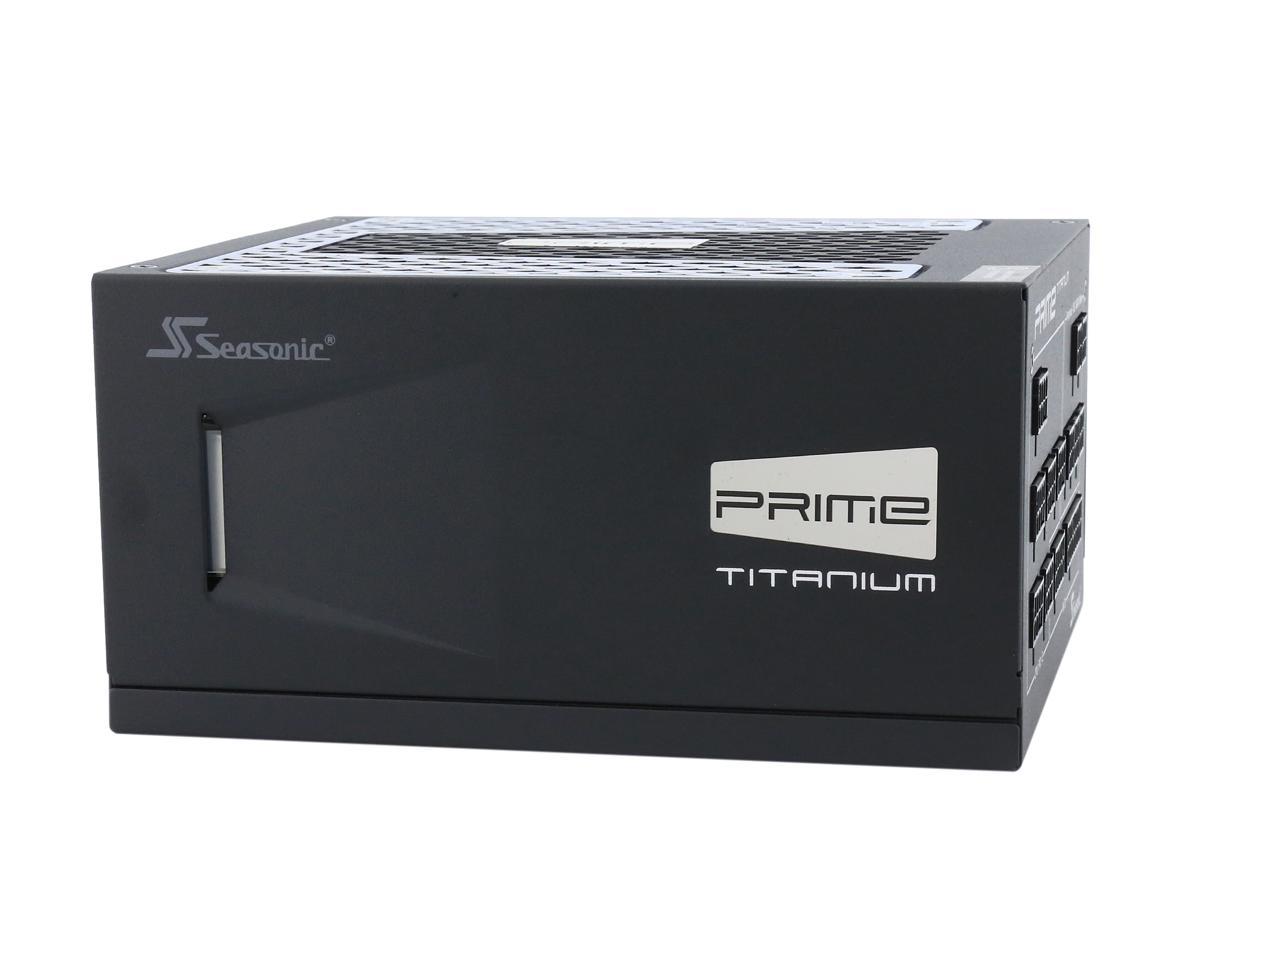 Seasonic PRIME TX-750, 750W 80+ Titanium, Full Modular, Fan 